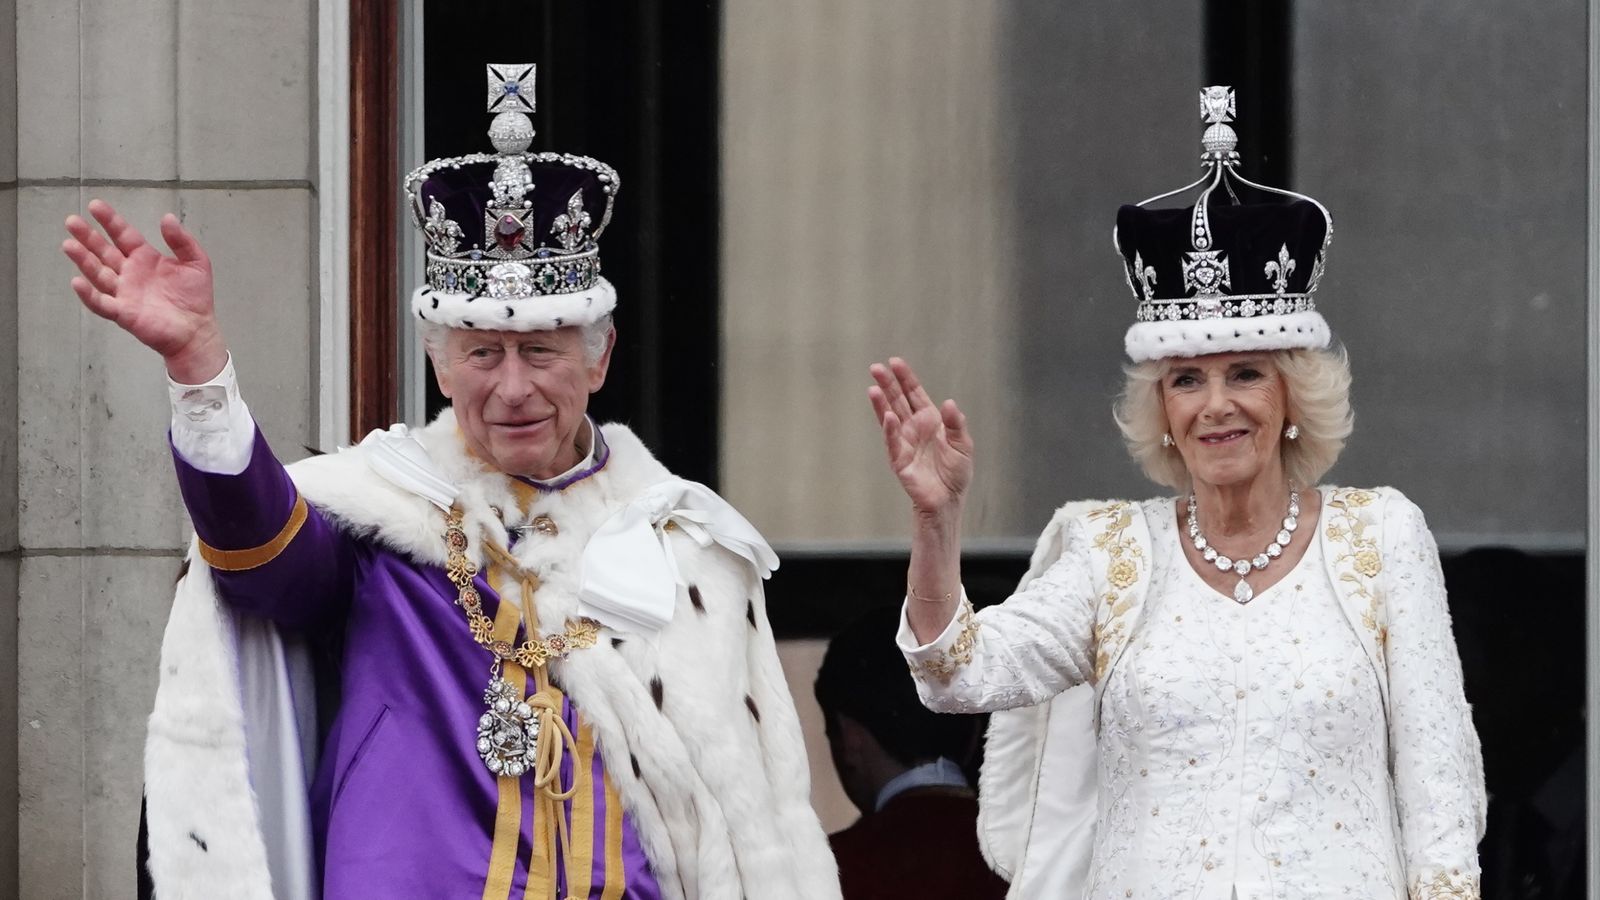 One year of King Charles III | News UK Video News | Sky News